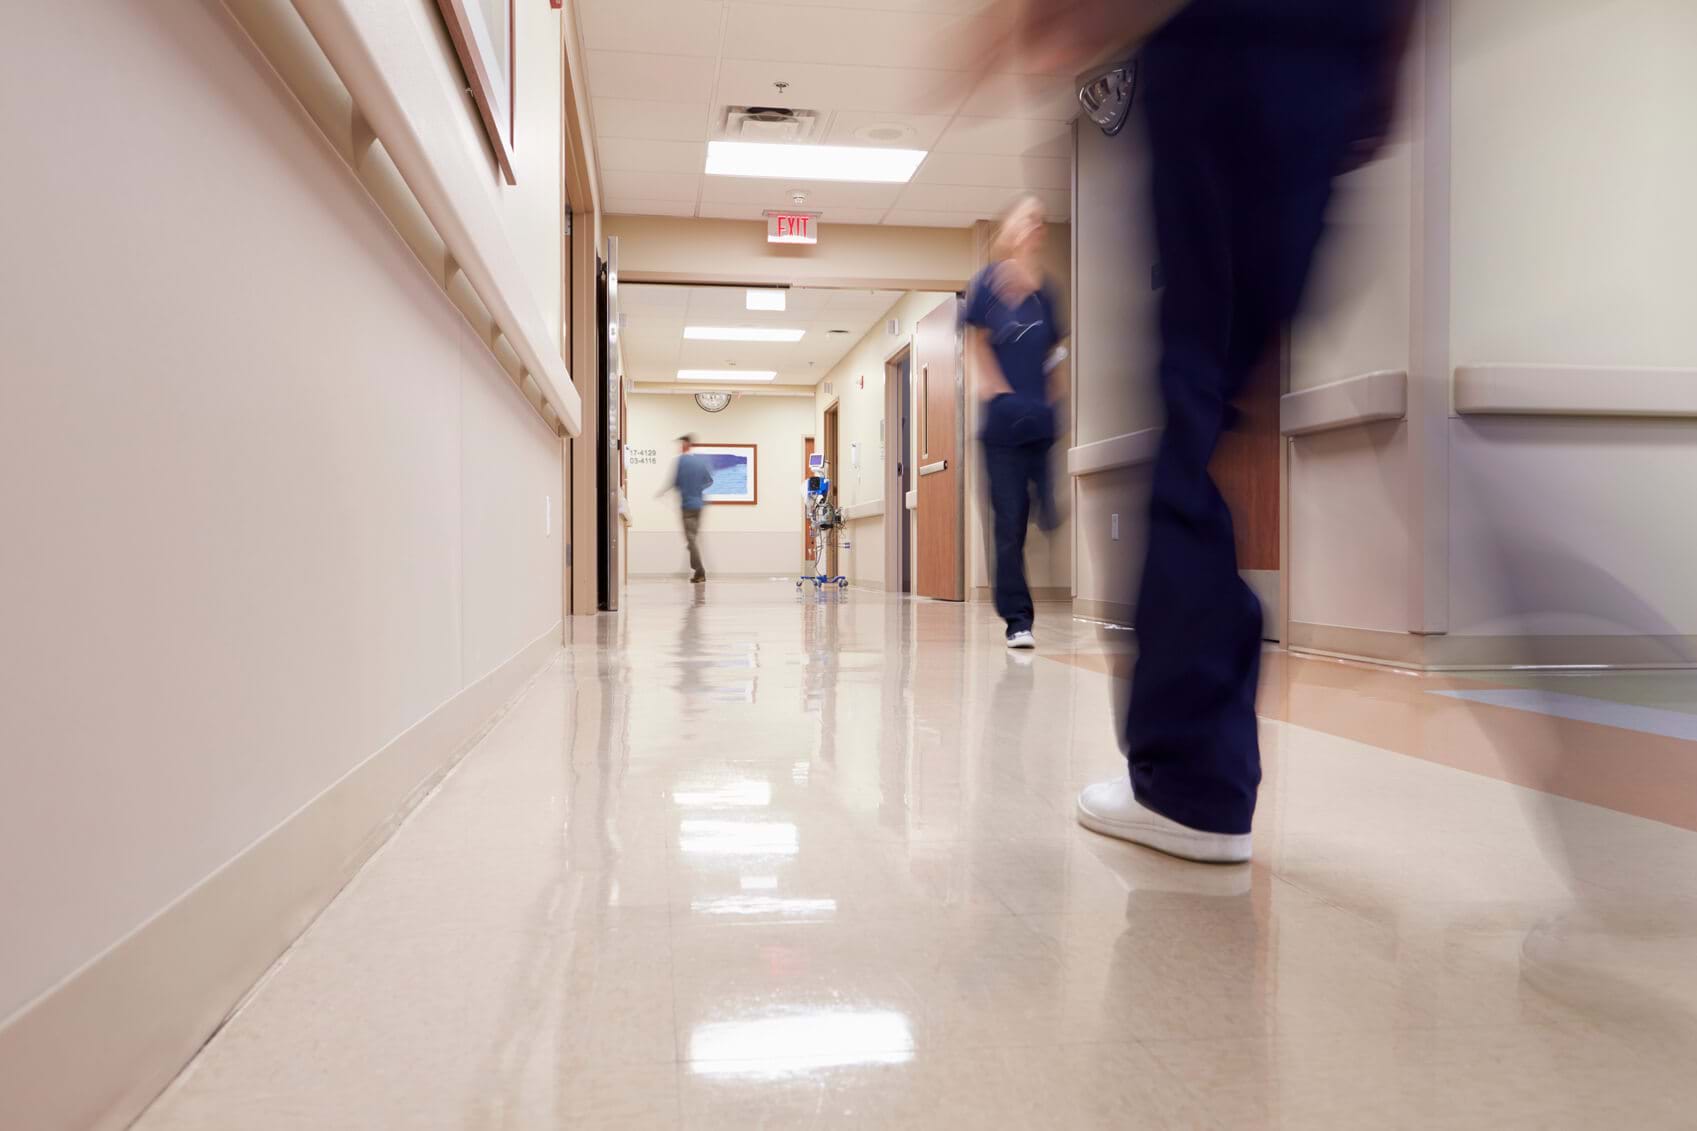 blurred image of medical staff moving along a hospital corridor